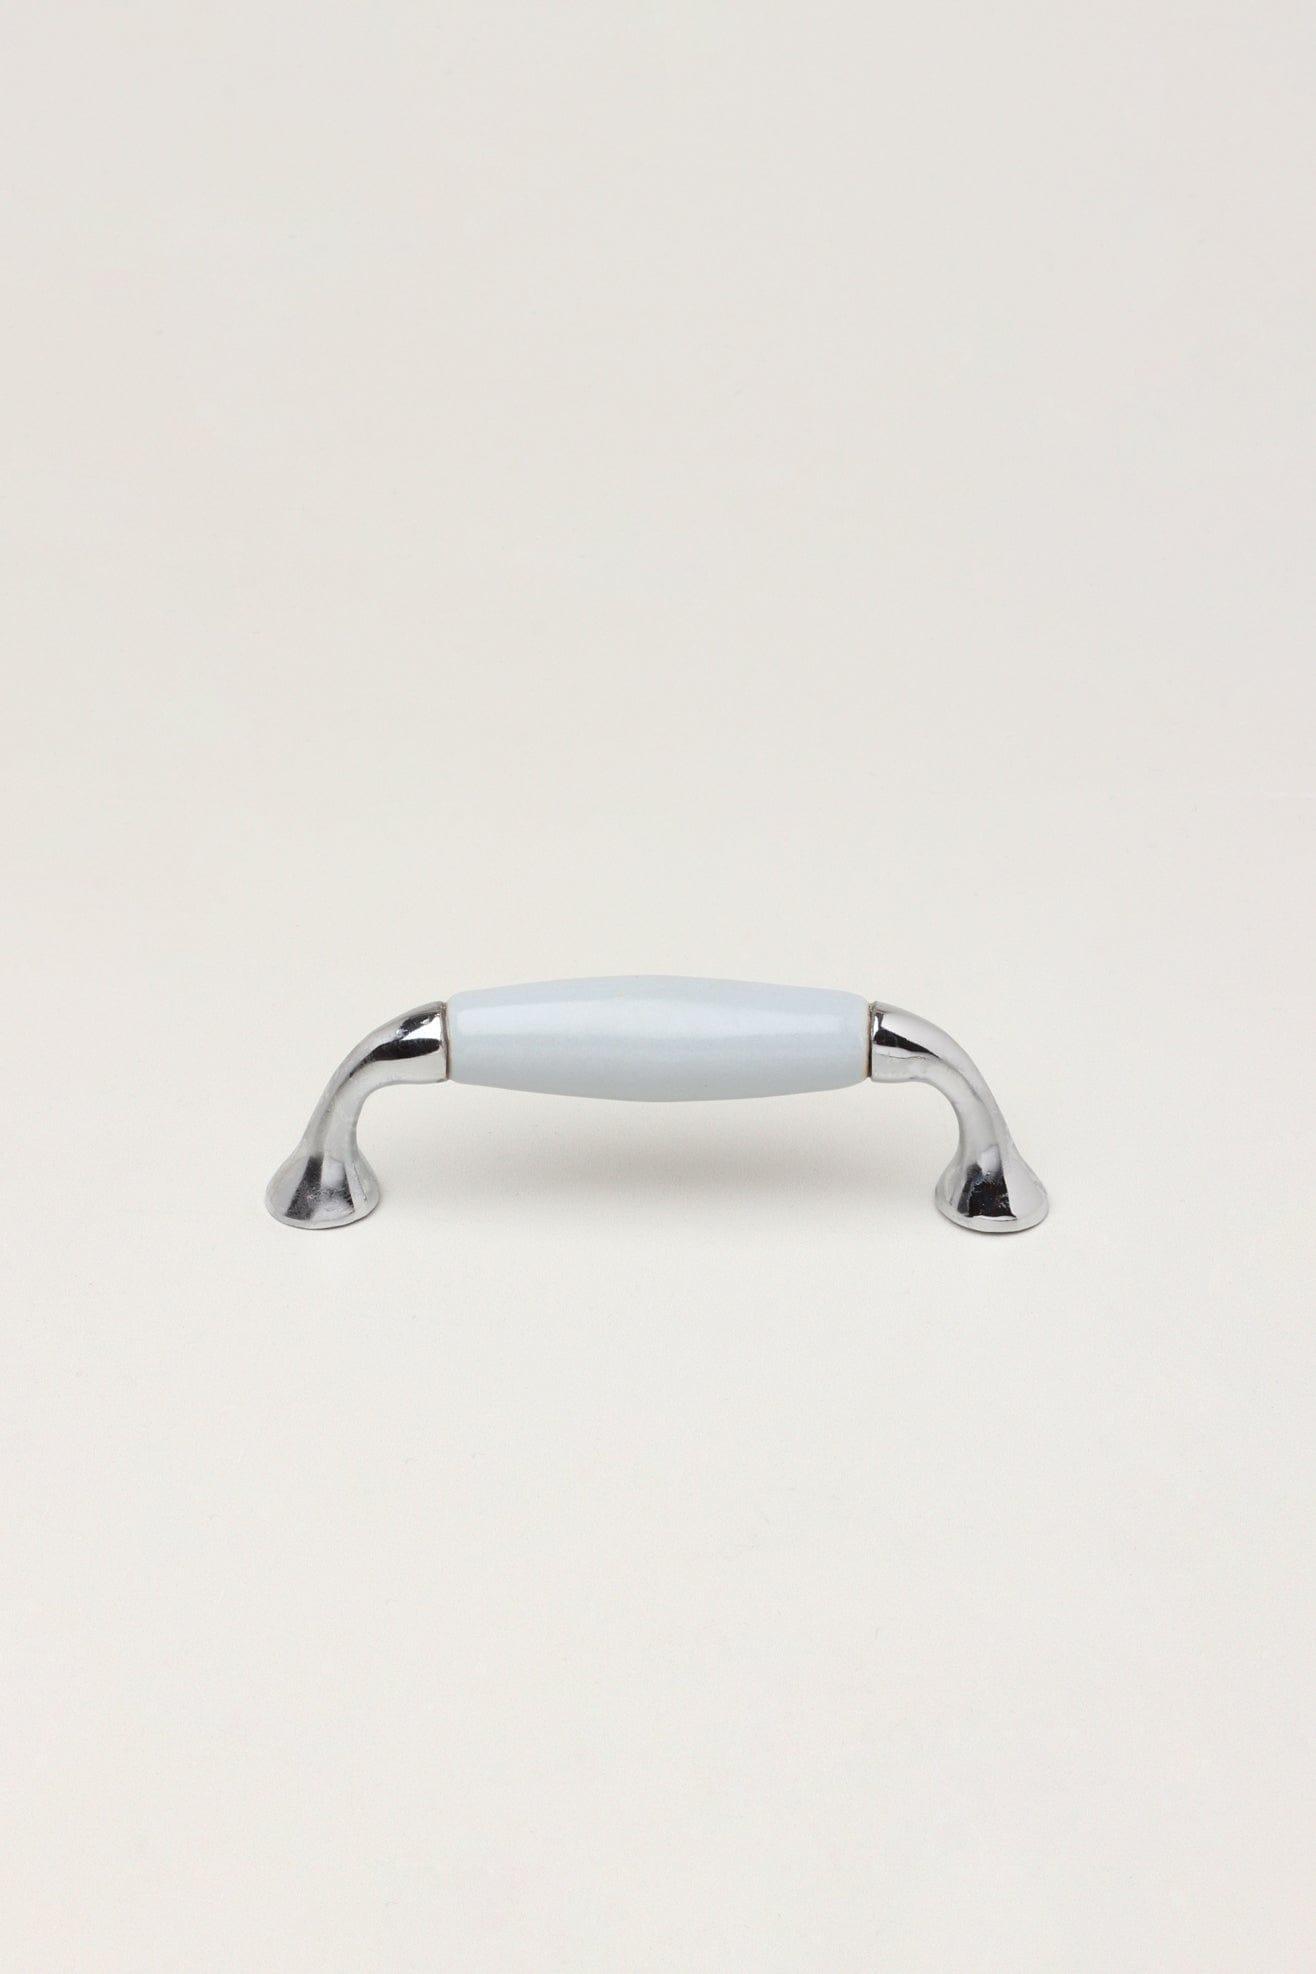 Gdecorstore Cabinet Knobs & Handles Grey White or Grey Ceramic Kitchen Cupboard Pull Handles